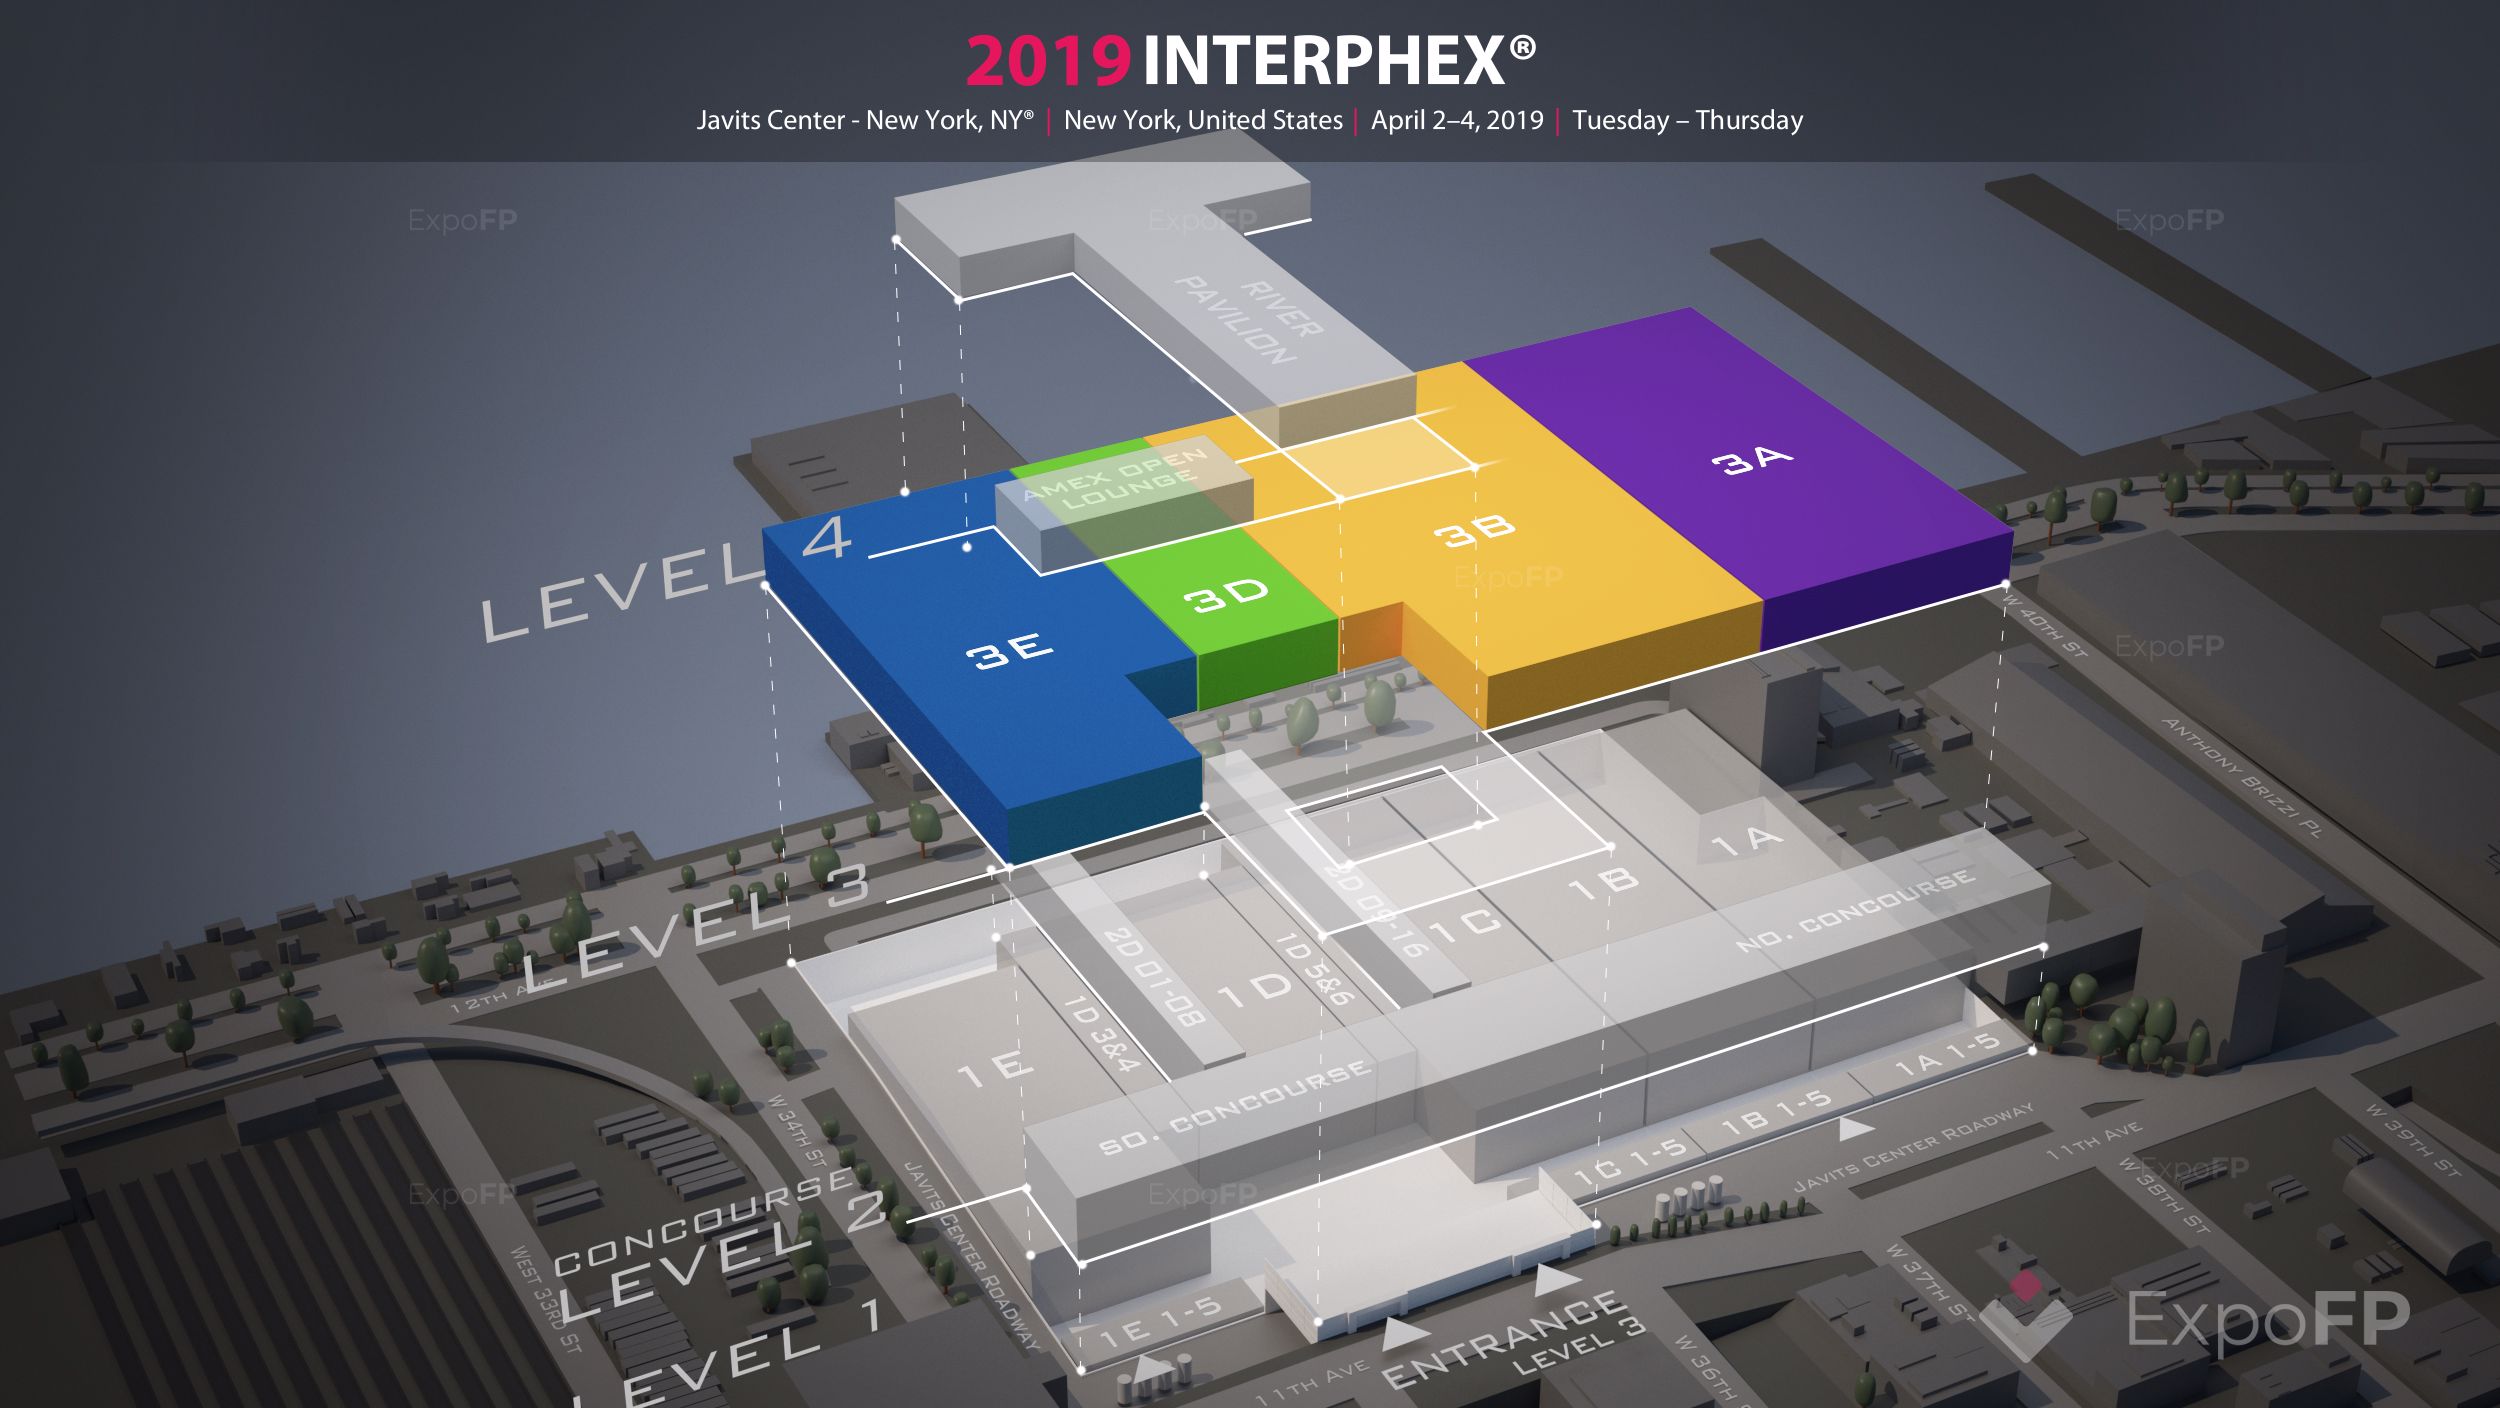 INTERPHEX 2019 in Javits Center New York, NY